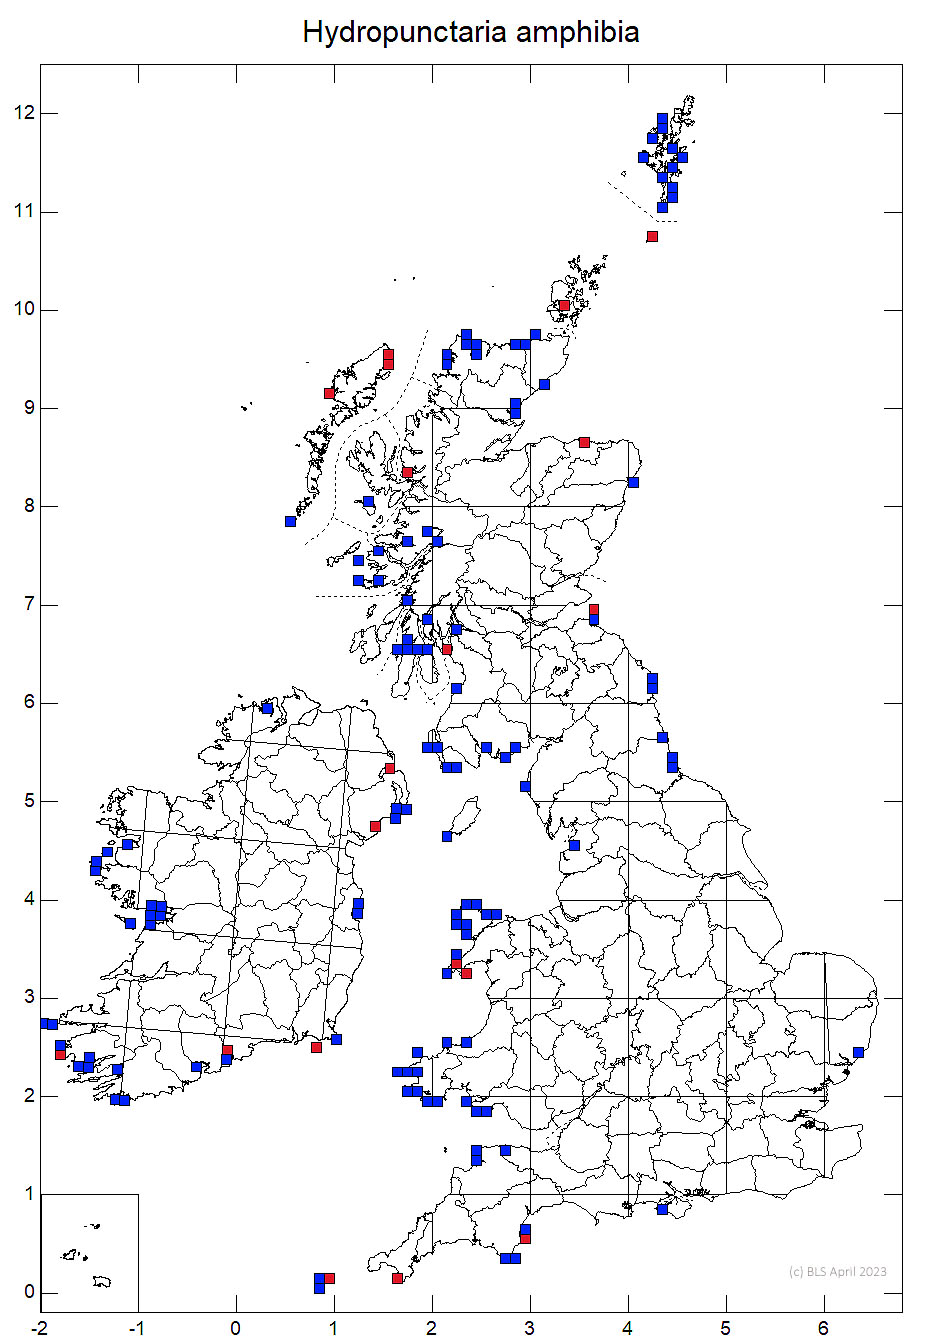 Hydropunctaria amphibia 10km sq distribution map